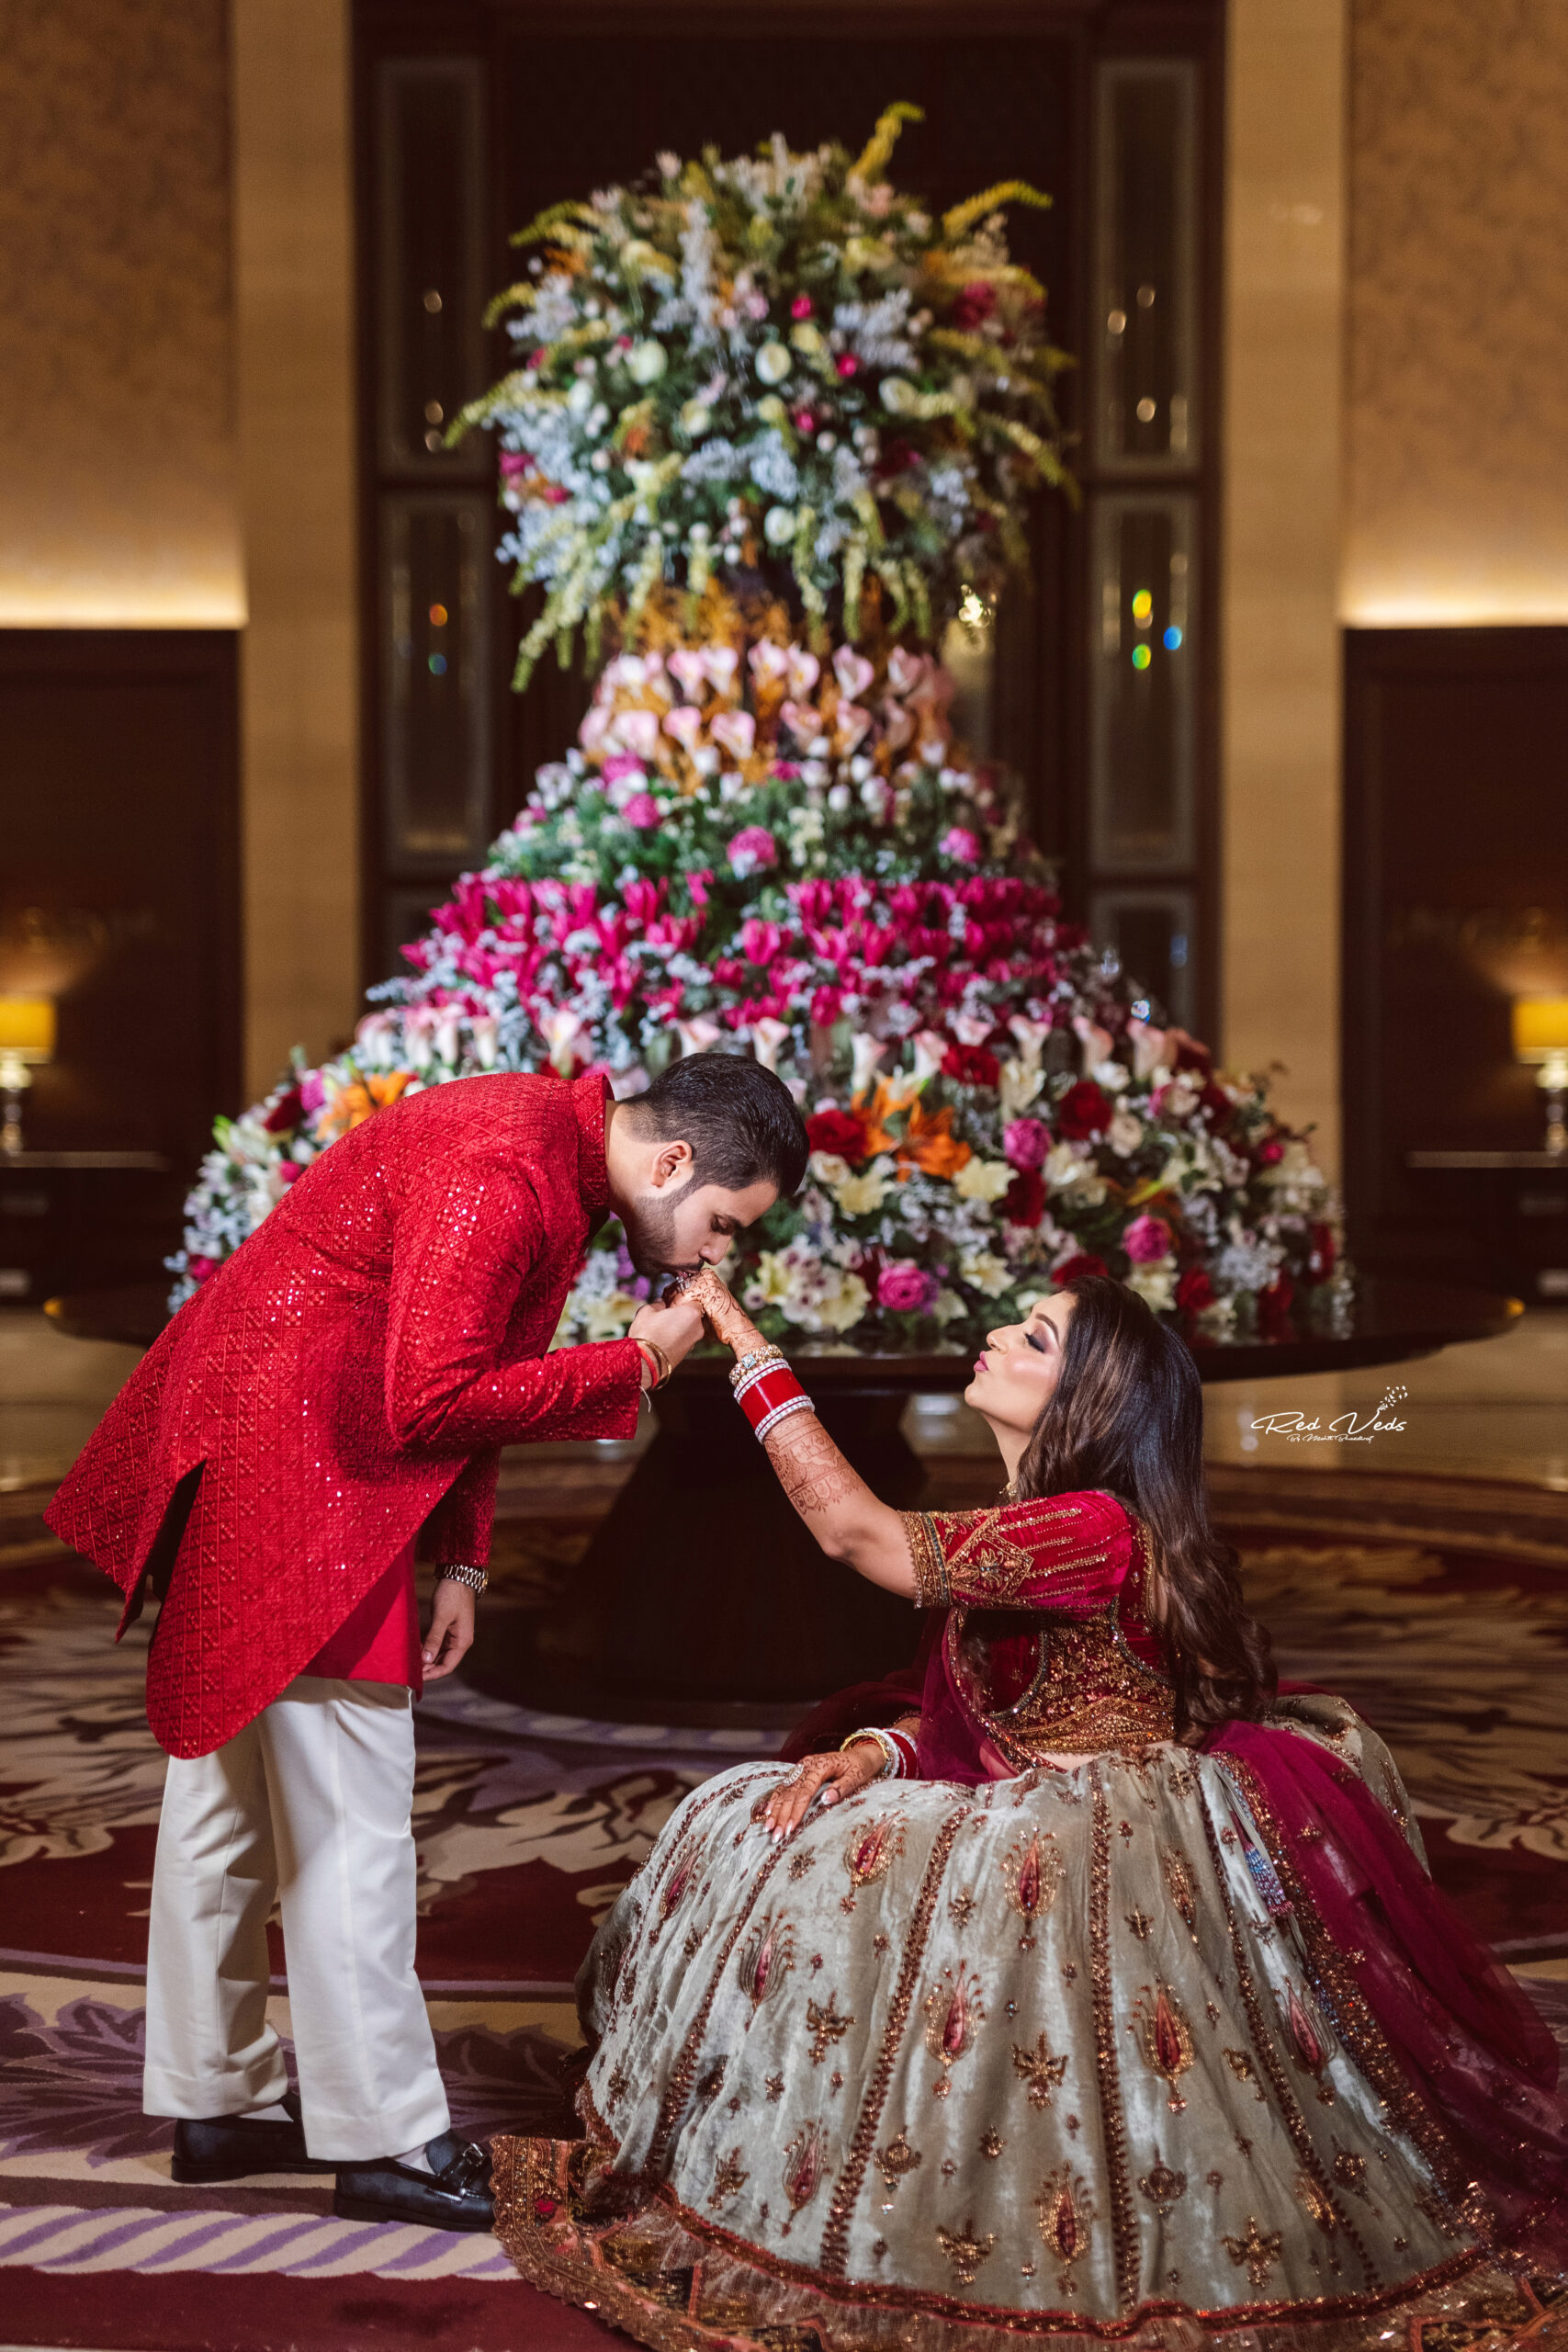 Wedding sherwani hi-res stock photography and images - Alamy